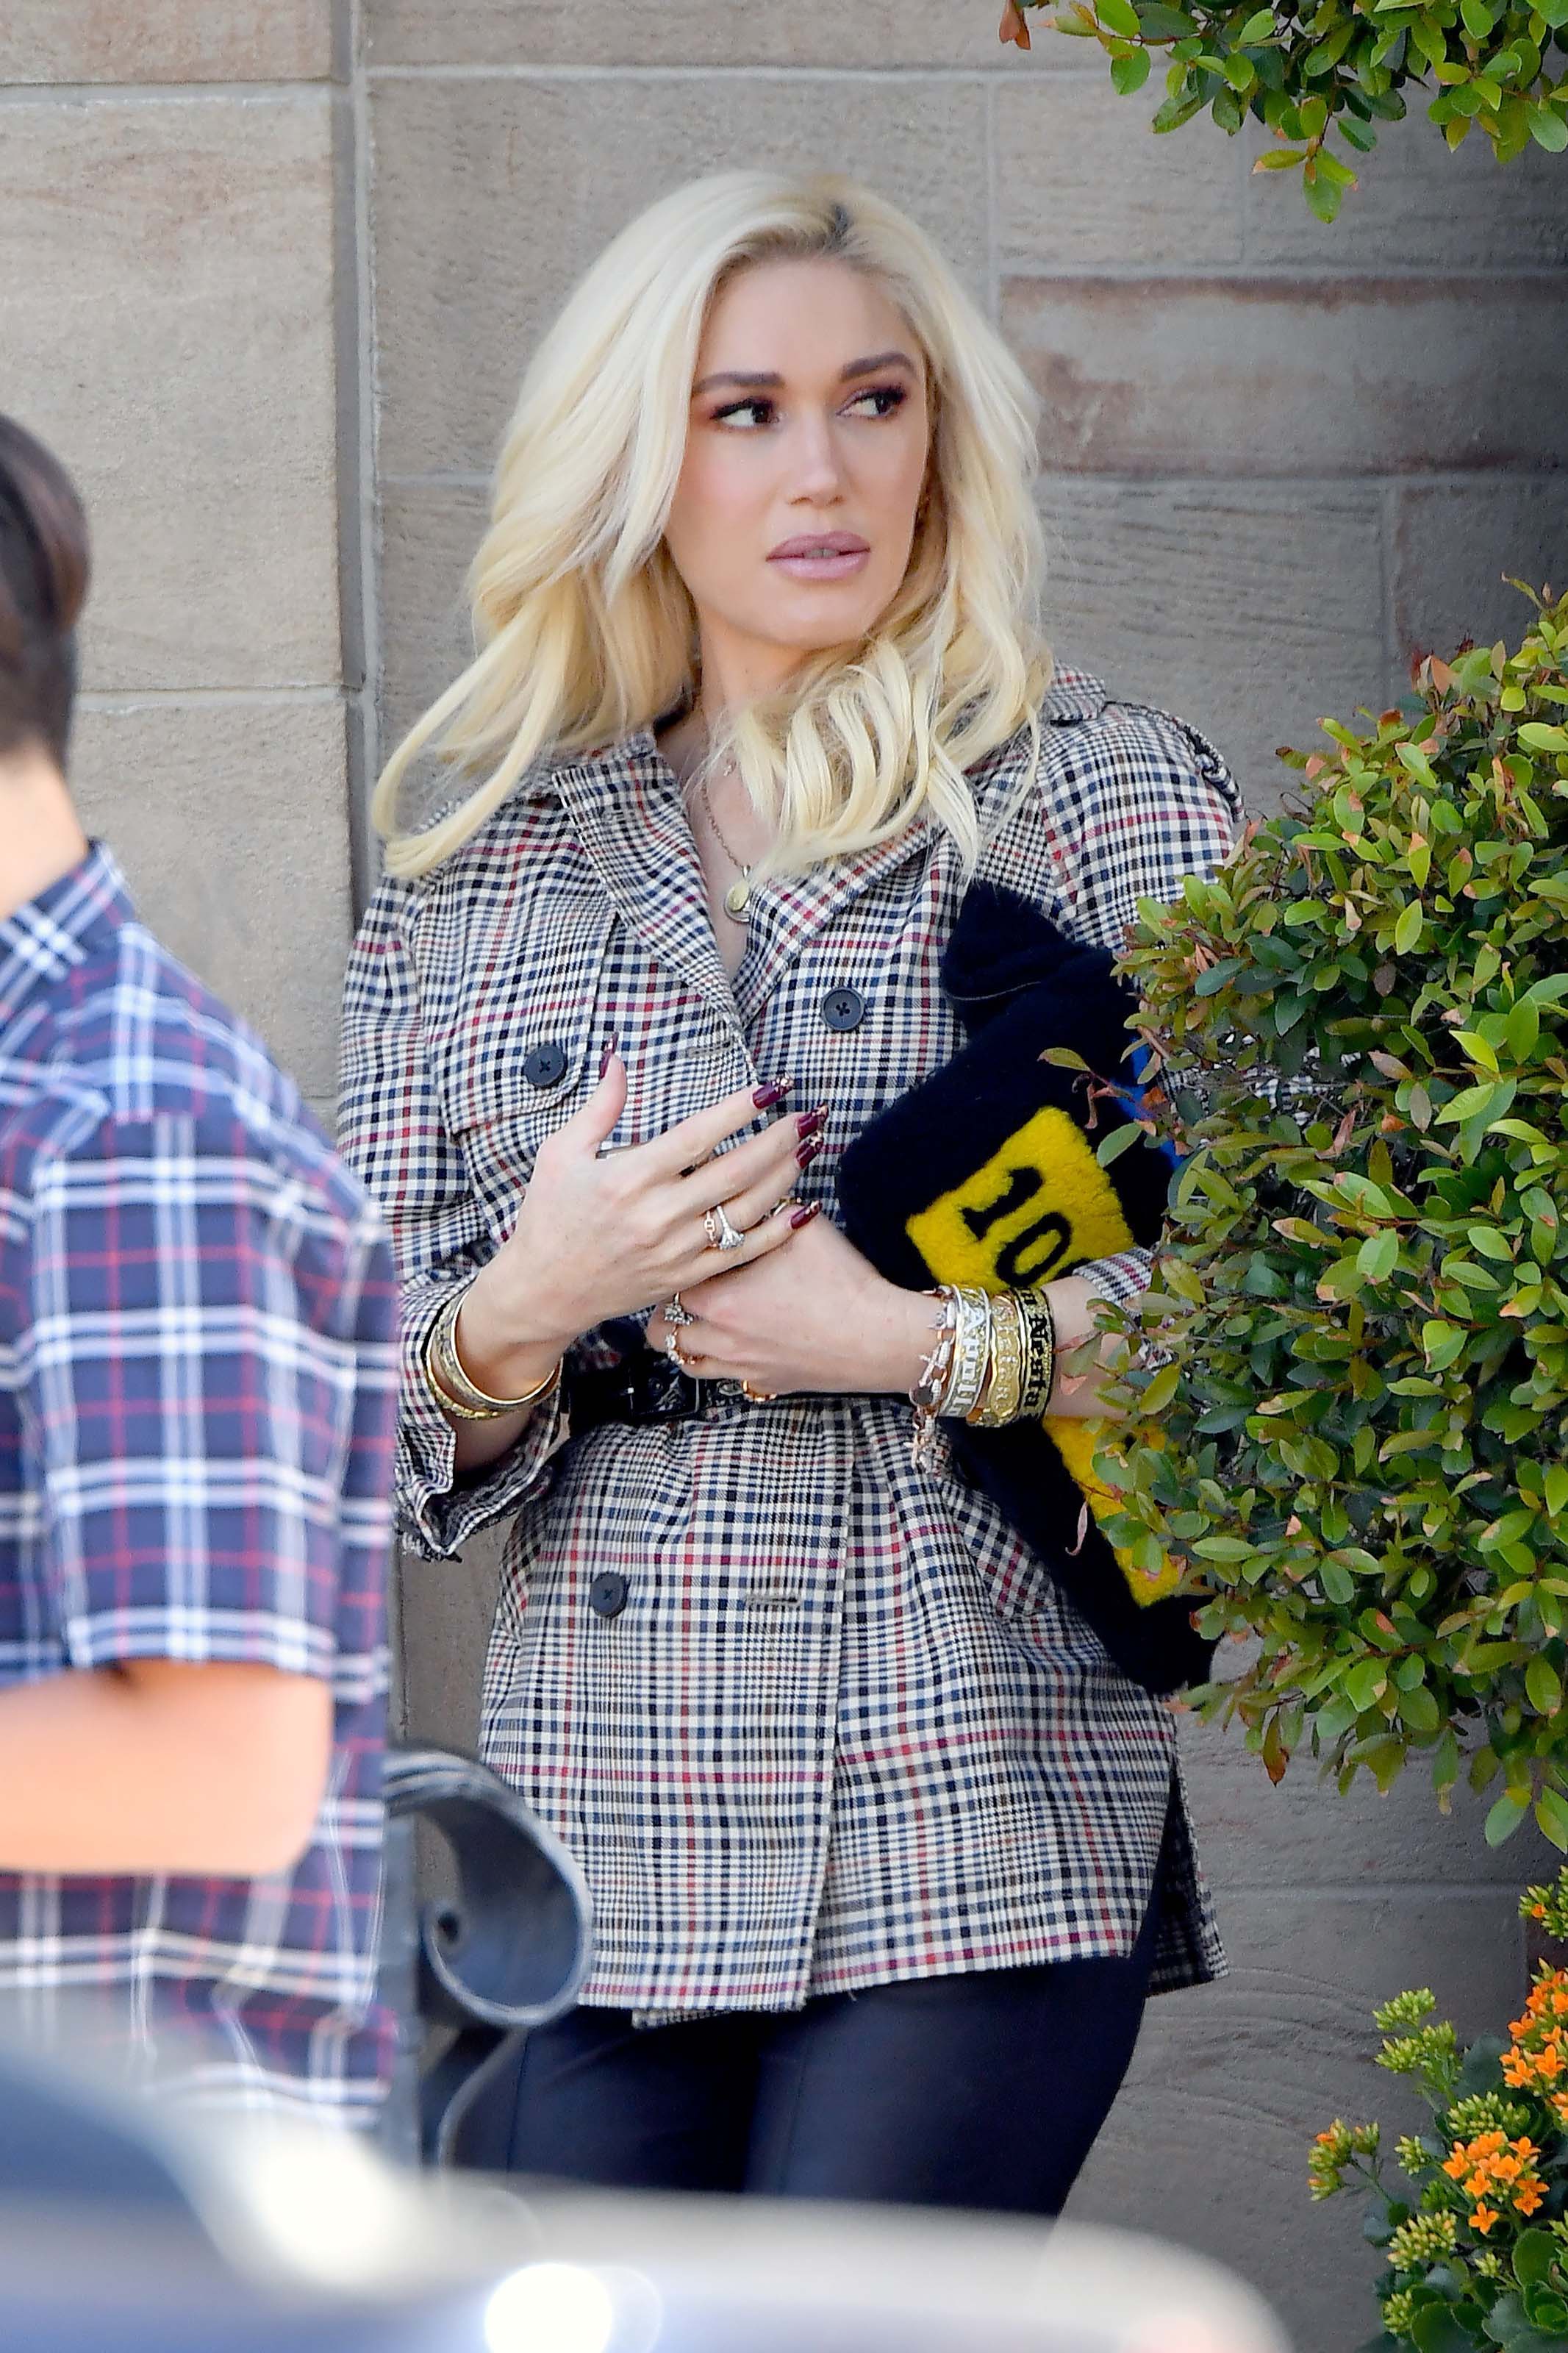 Gwen Stefani heads to church